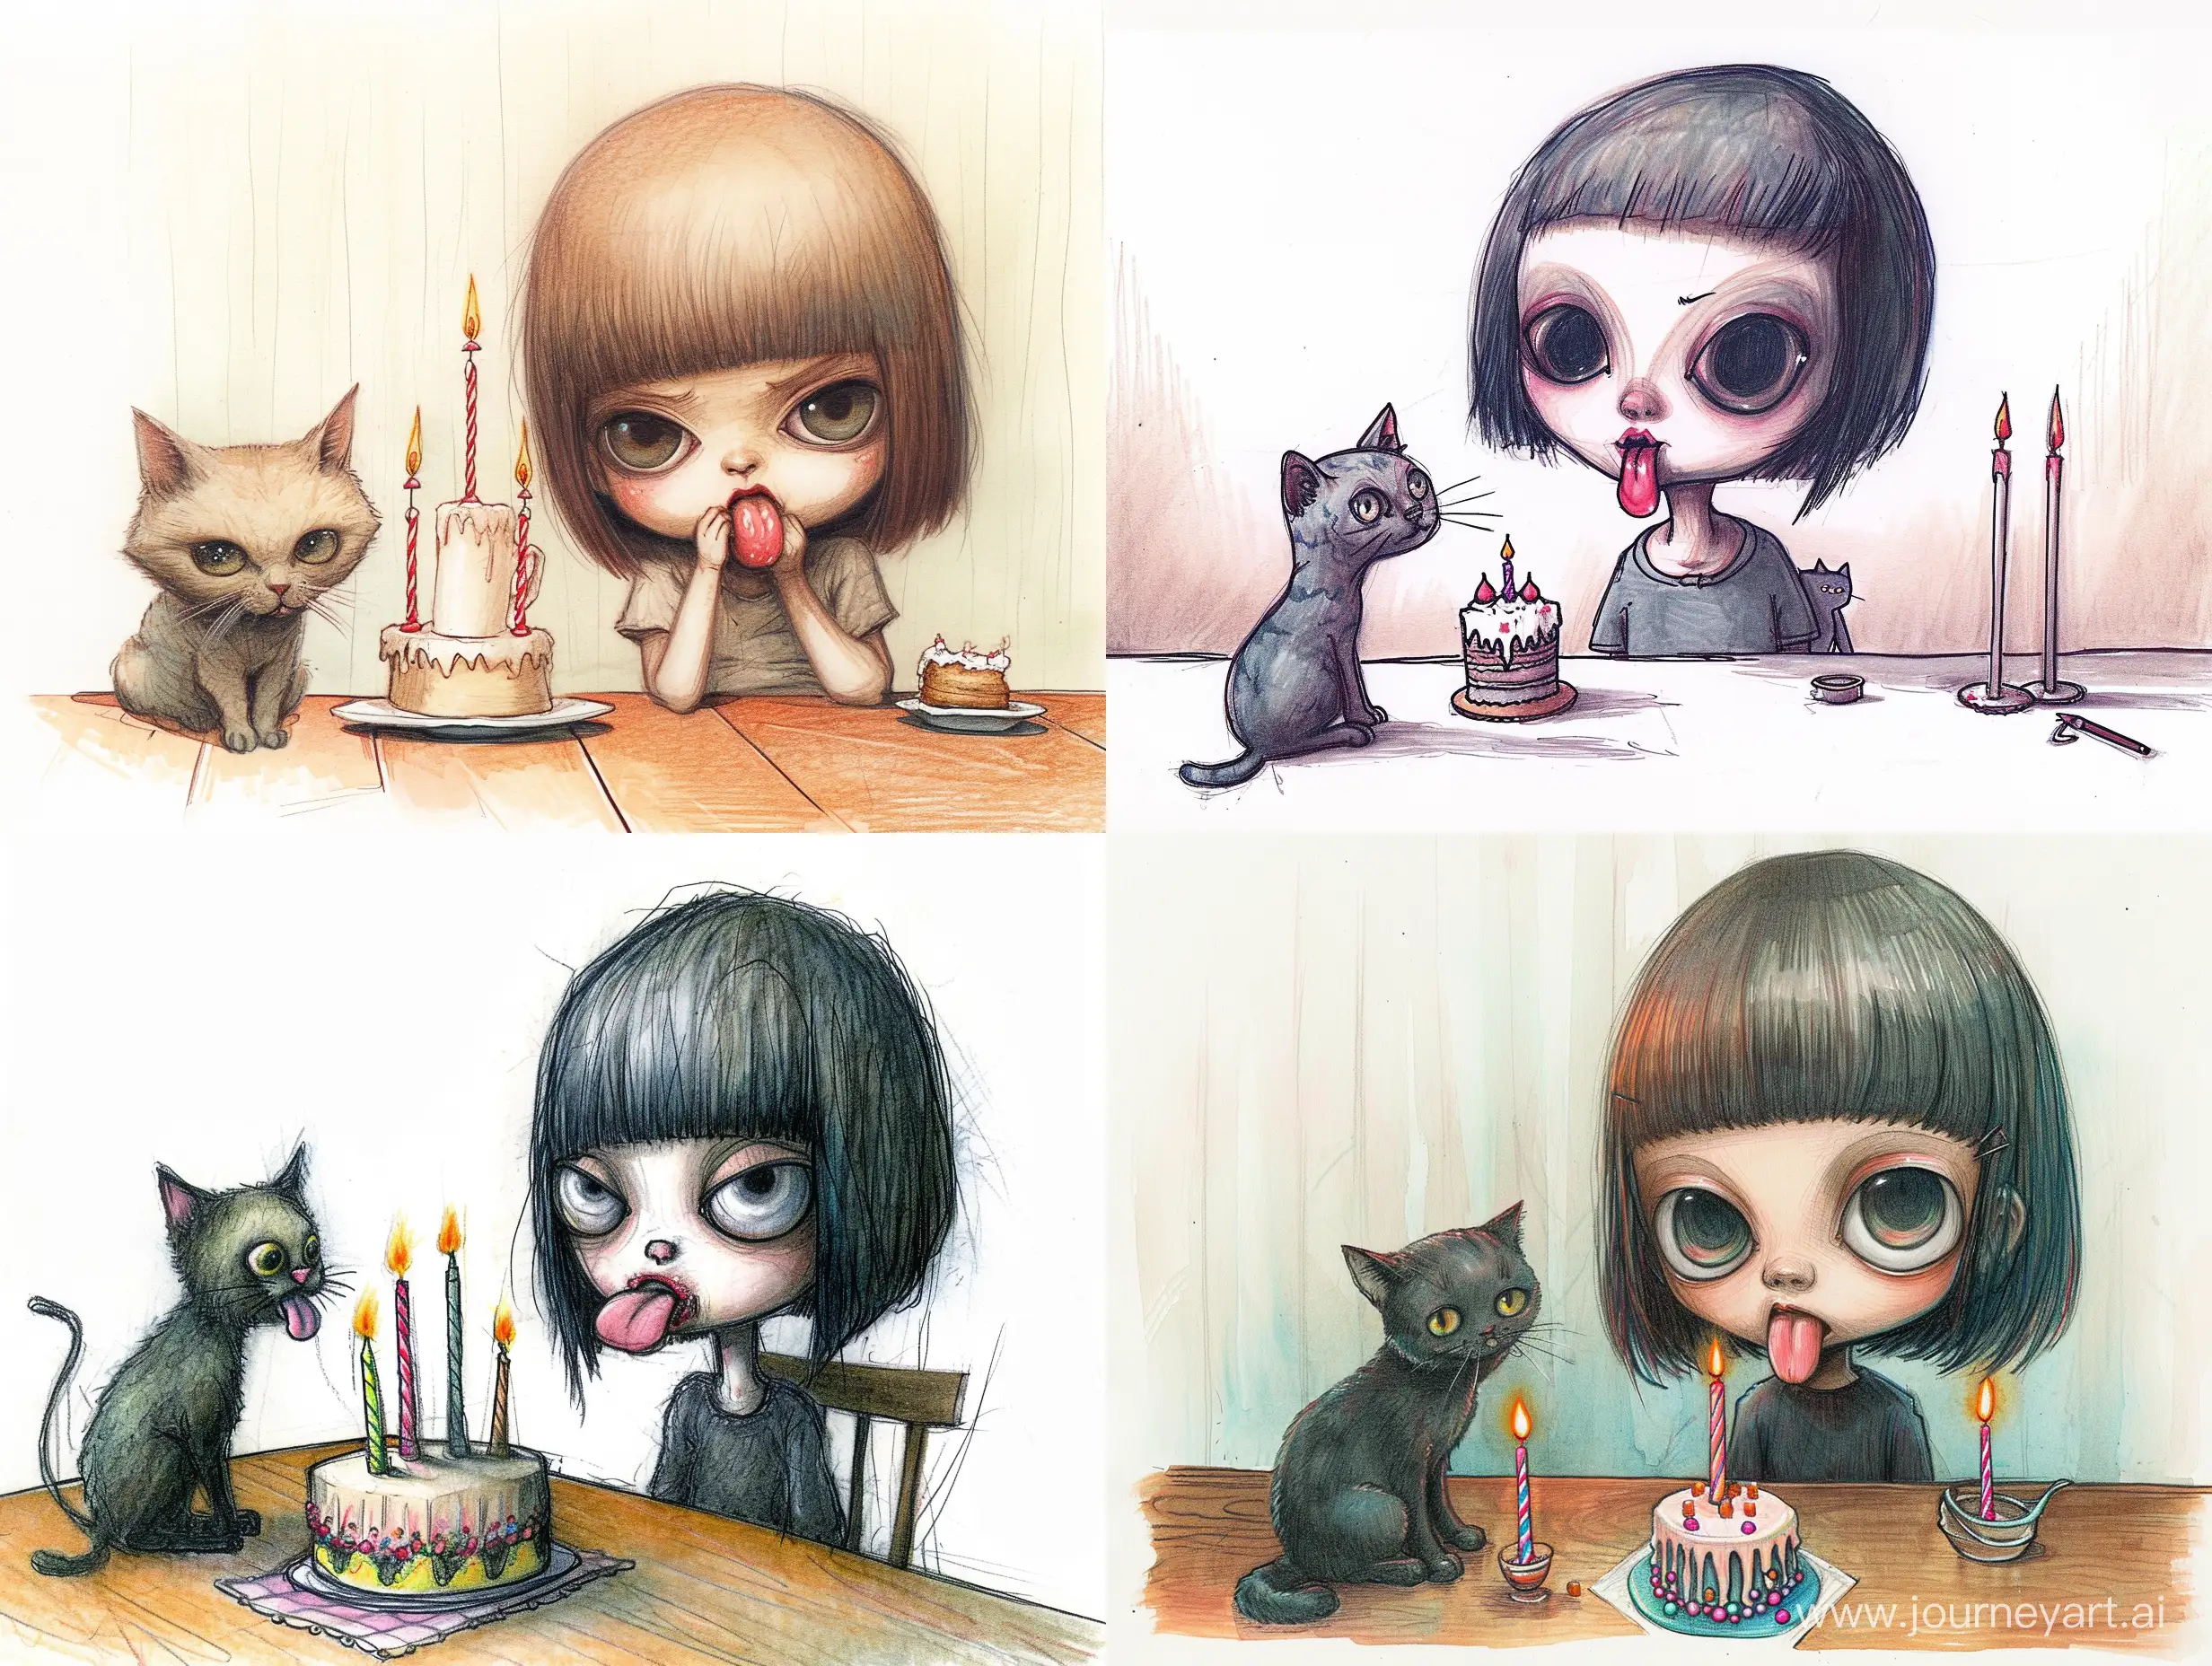 Playful-Gothic-Girl-Celebrating-Birthday-with-Creepy-Cake-and-Cat